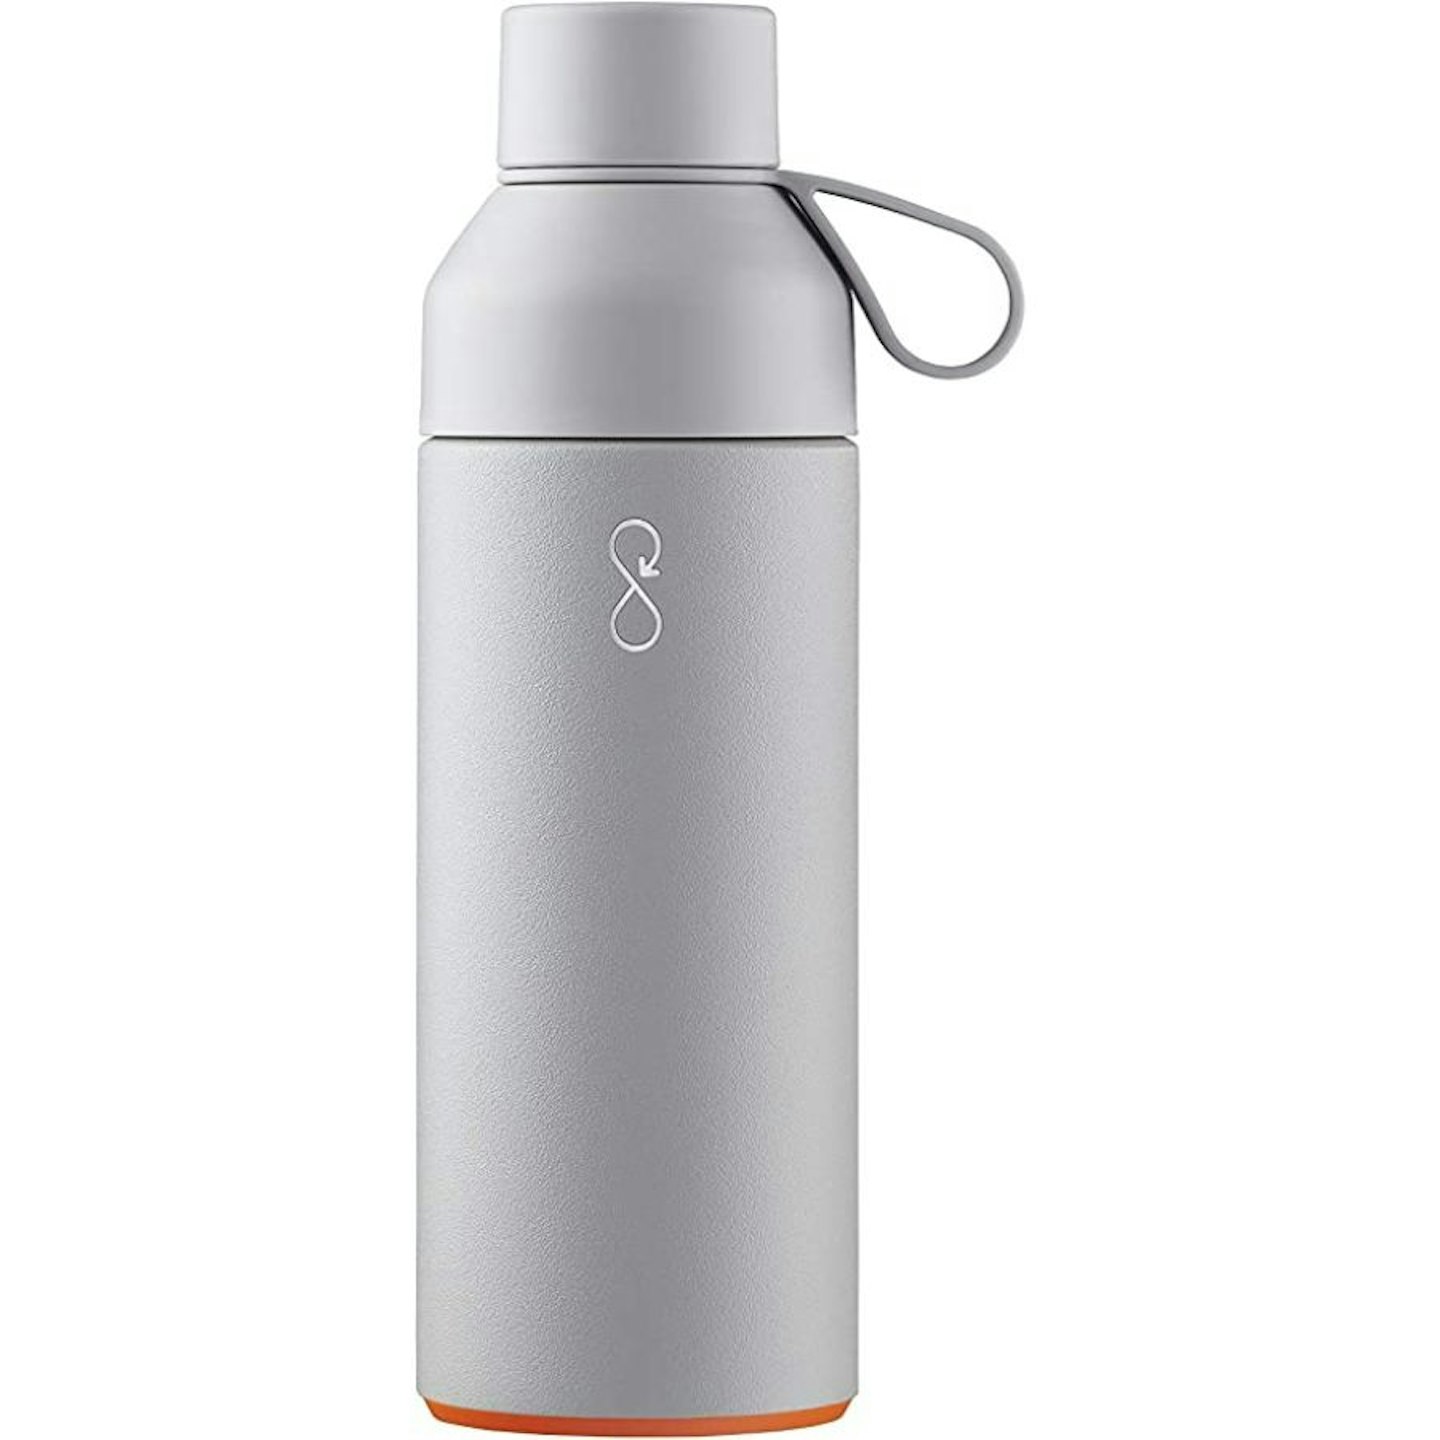 Ocean Bottle 500ml Eco-Friendly Stainless Steel Reusable Water Bottle